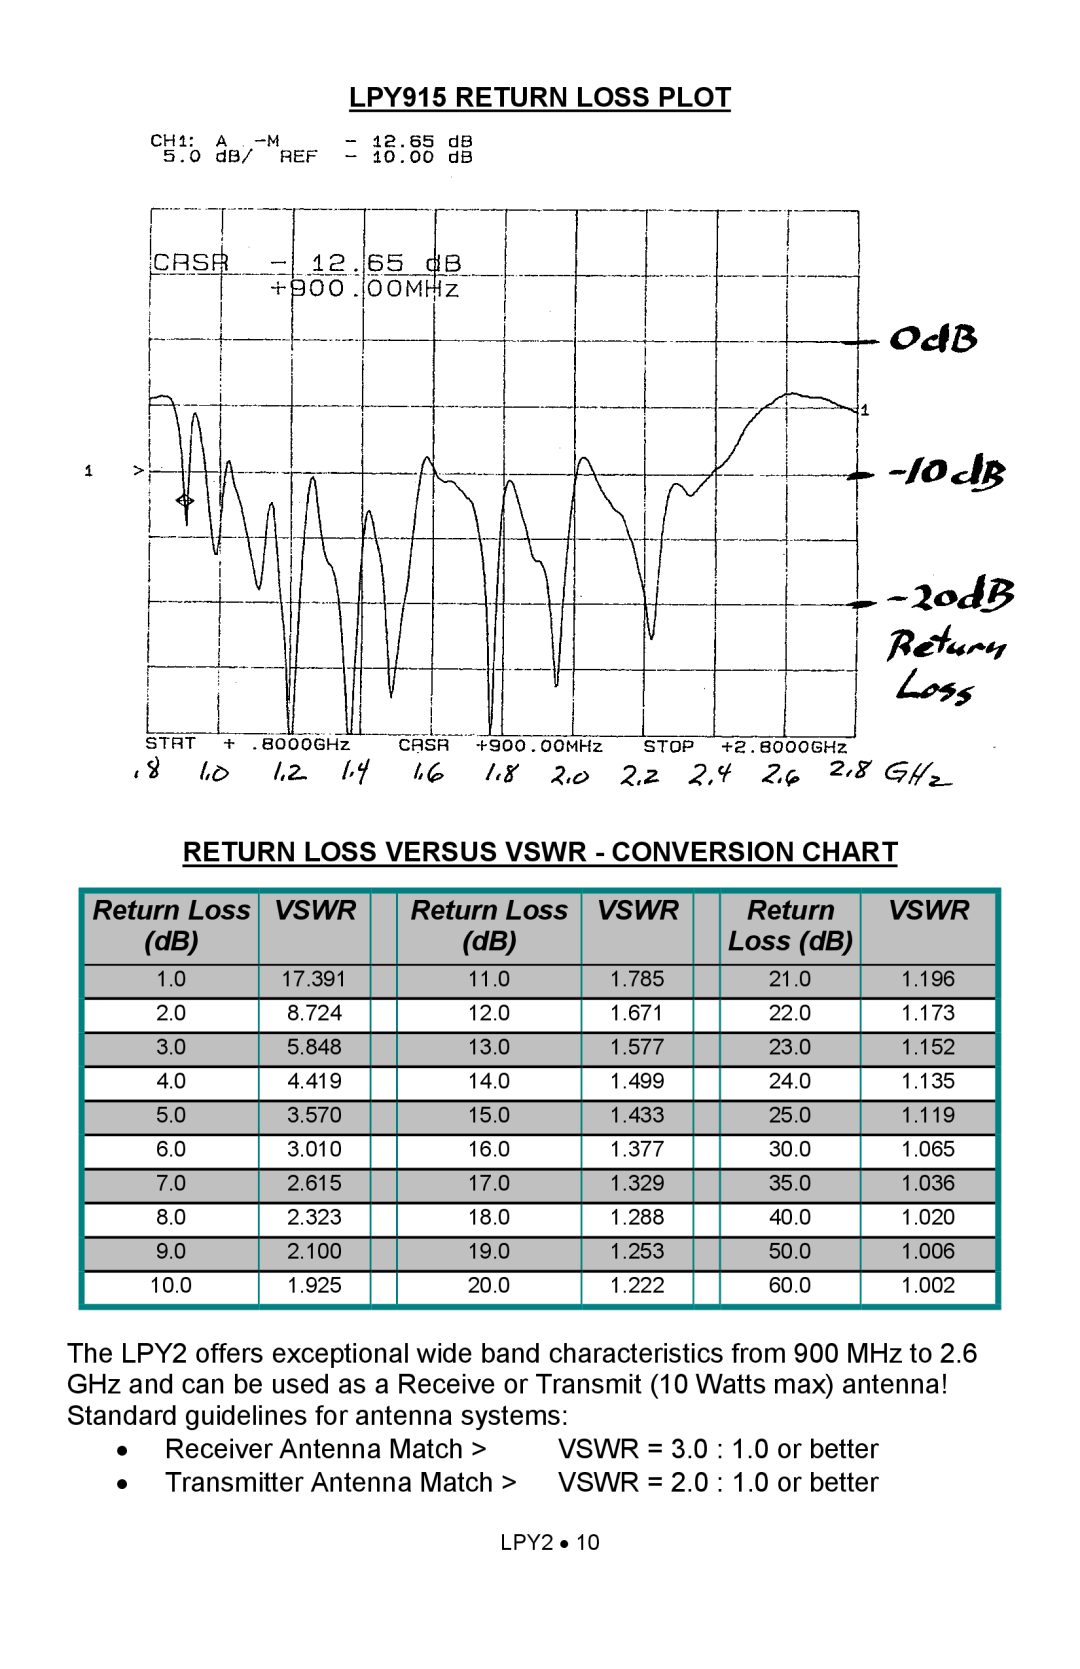 Ramsey Electronics manual LPY915 RETURN LOSS PLOT, Return Loss Versus Vswr - Conversion Chart, Loss dB 